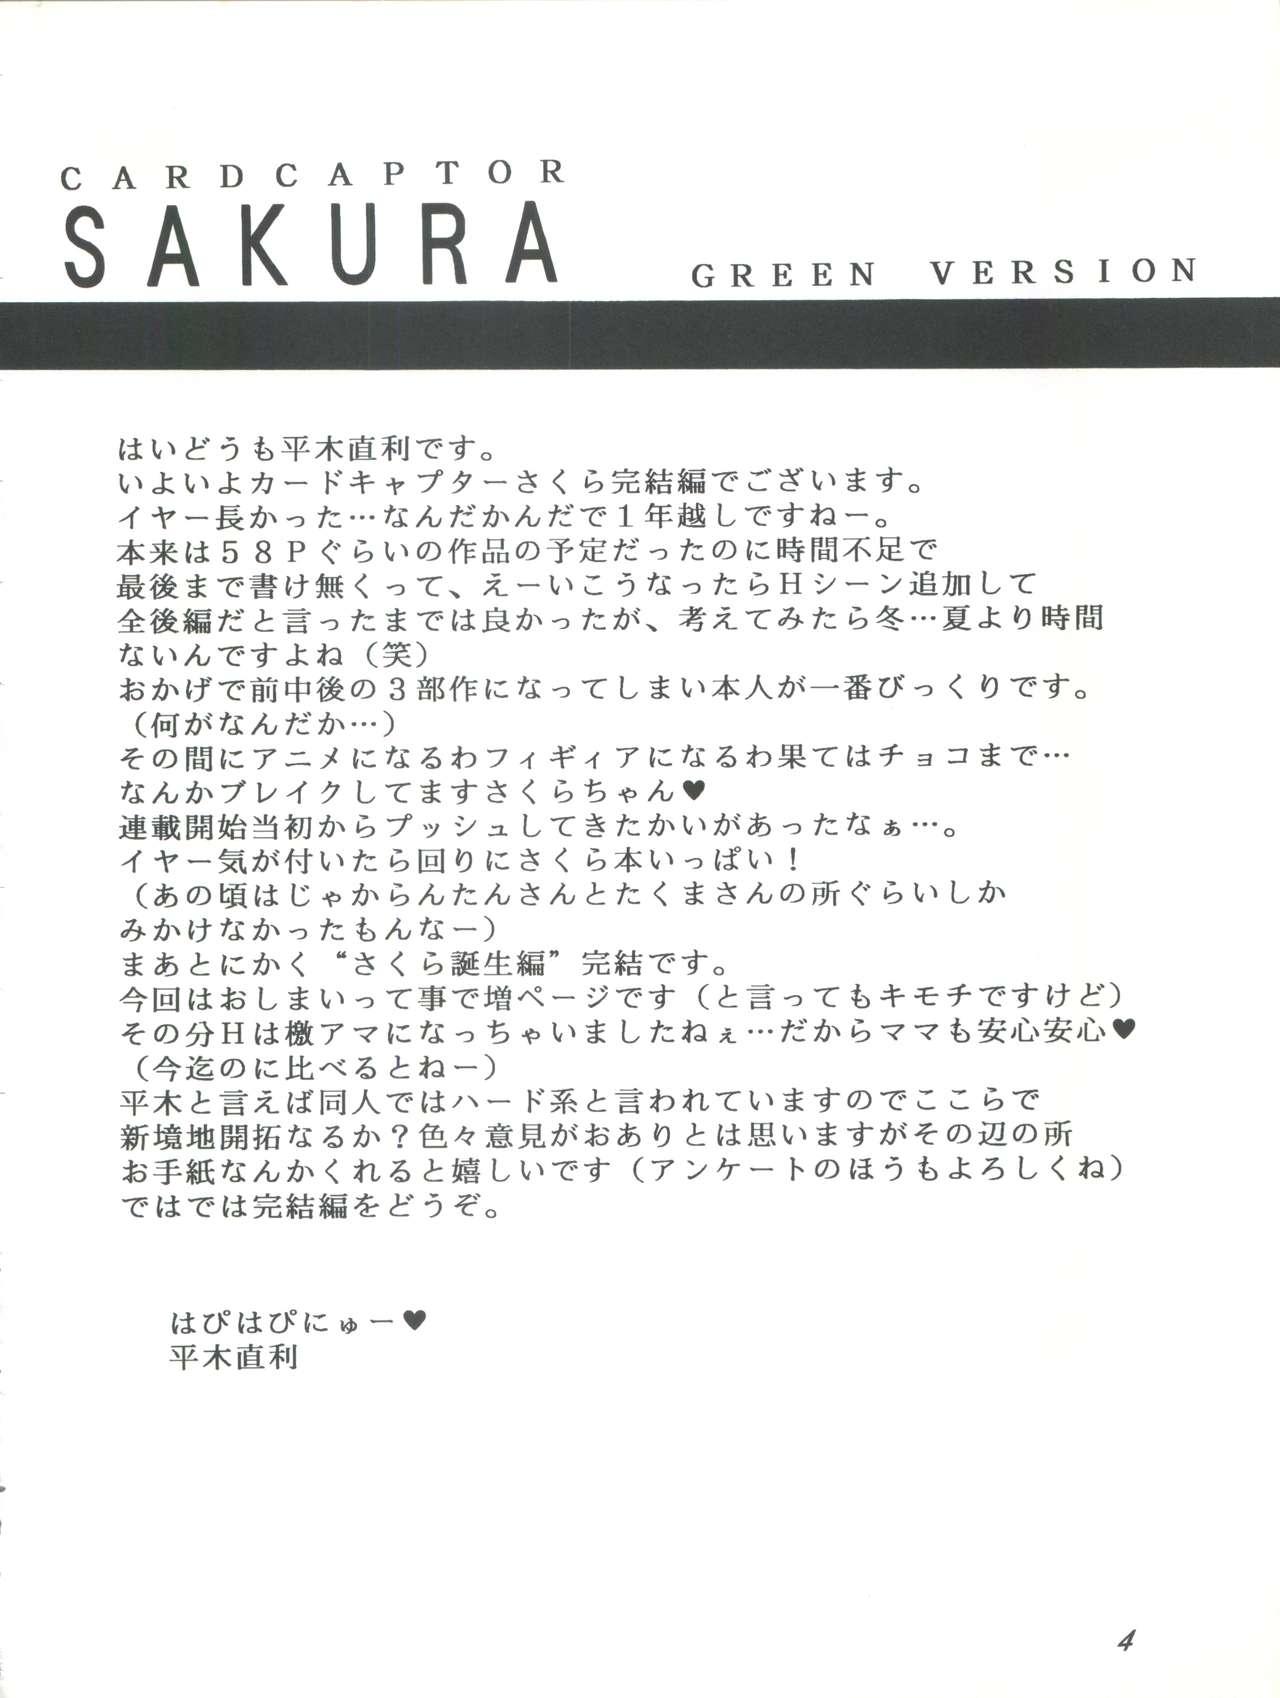 Card Captor Sakura Act 3 Green Version 3